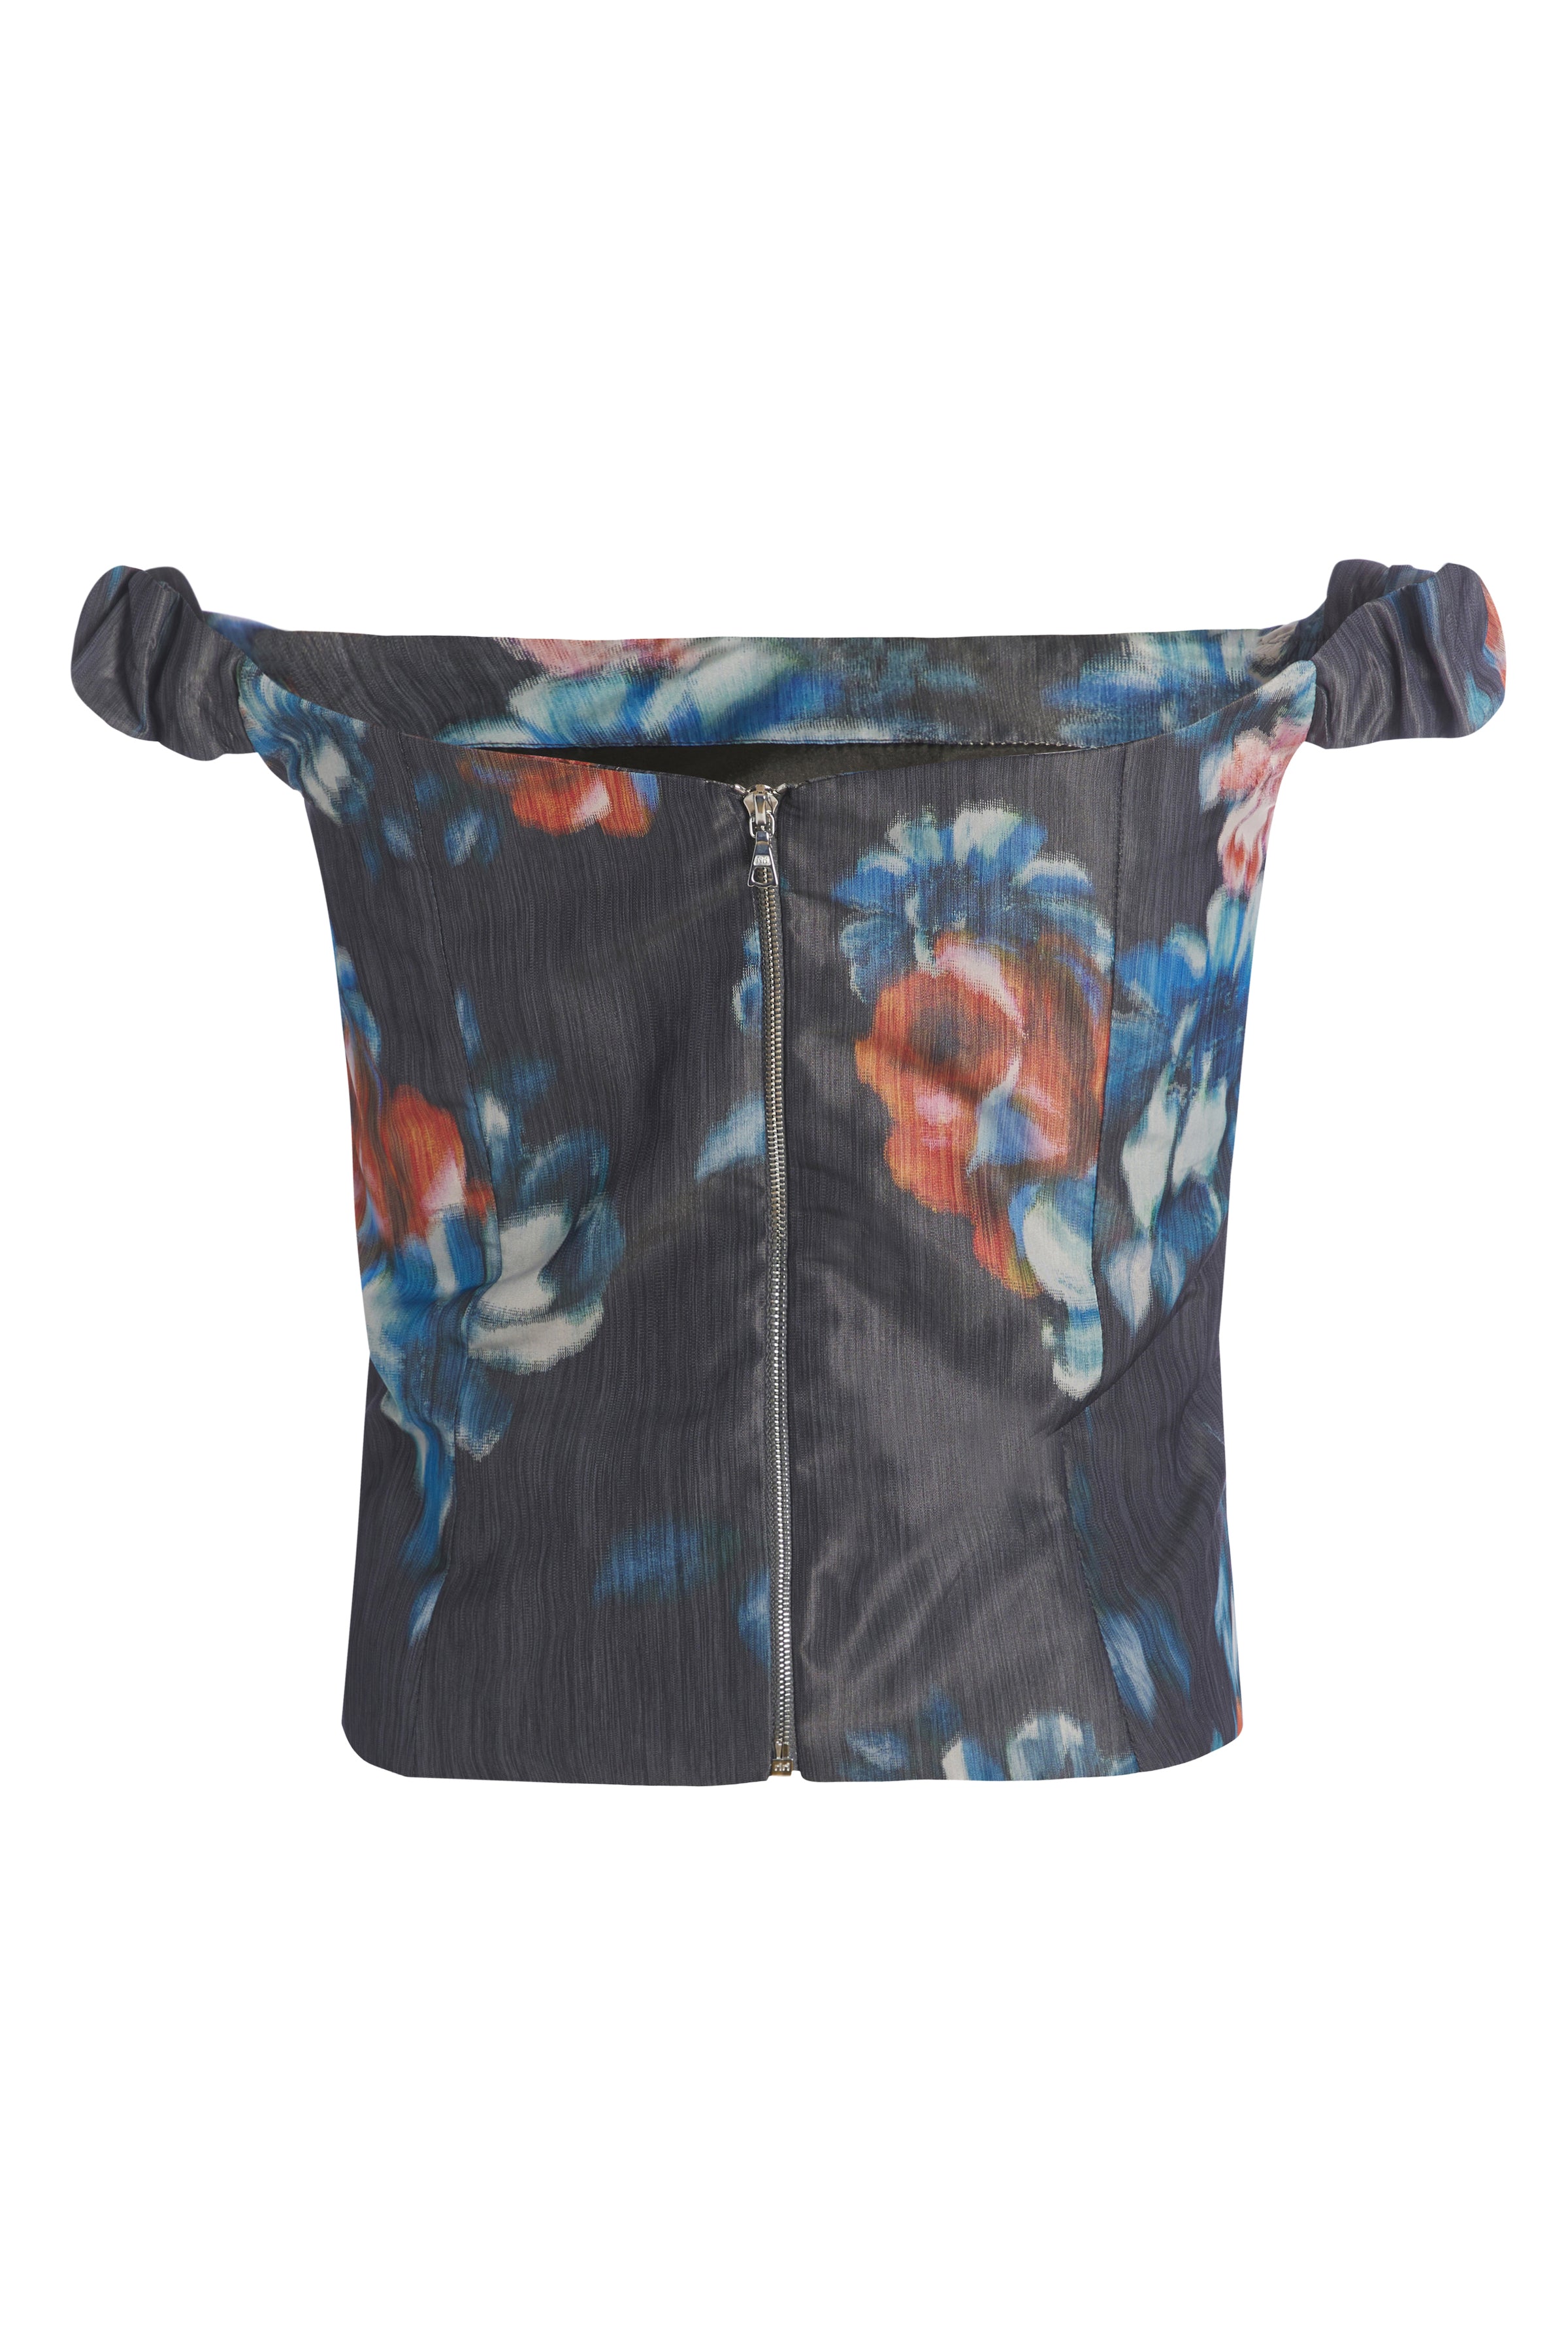 Hayworth Dark Floral Ikat Off The Shoulder Corset Top